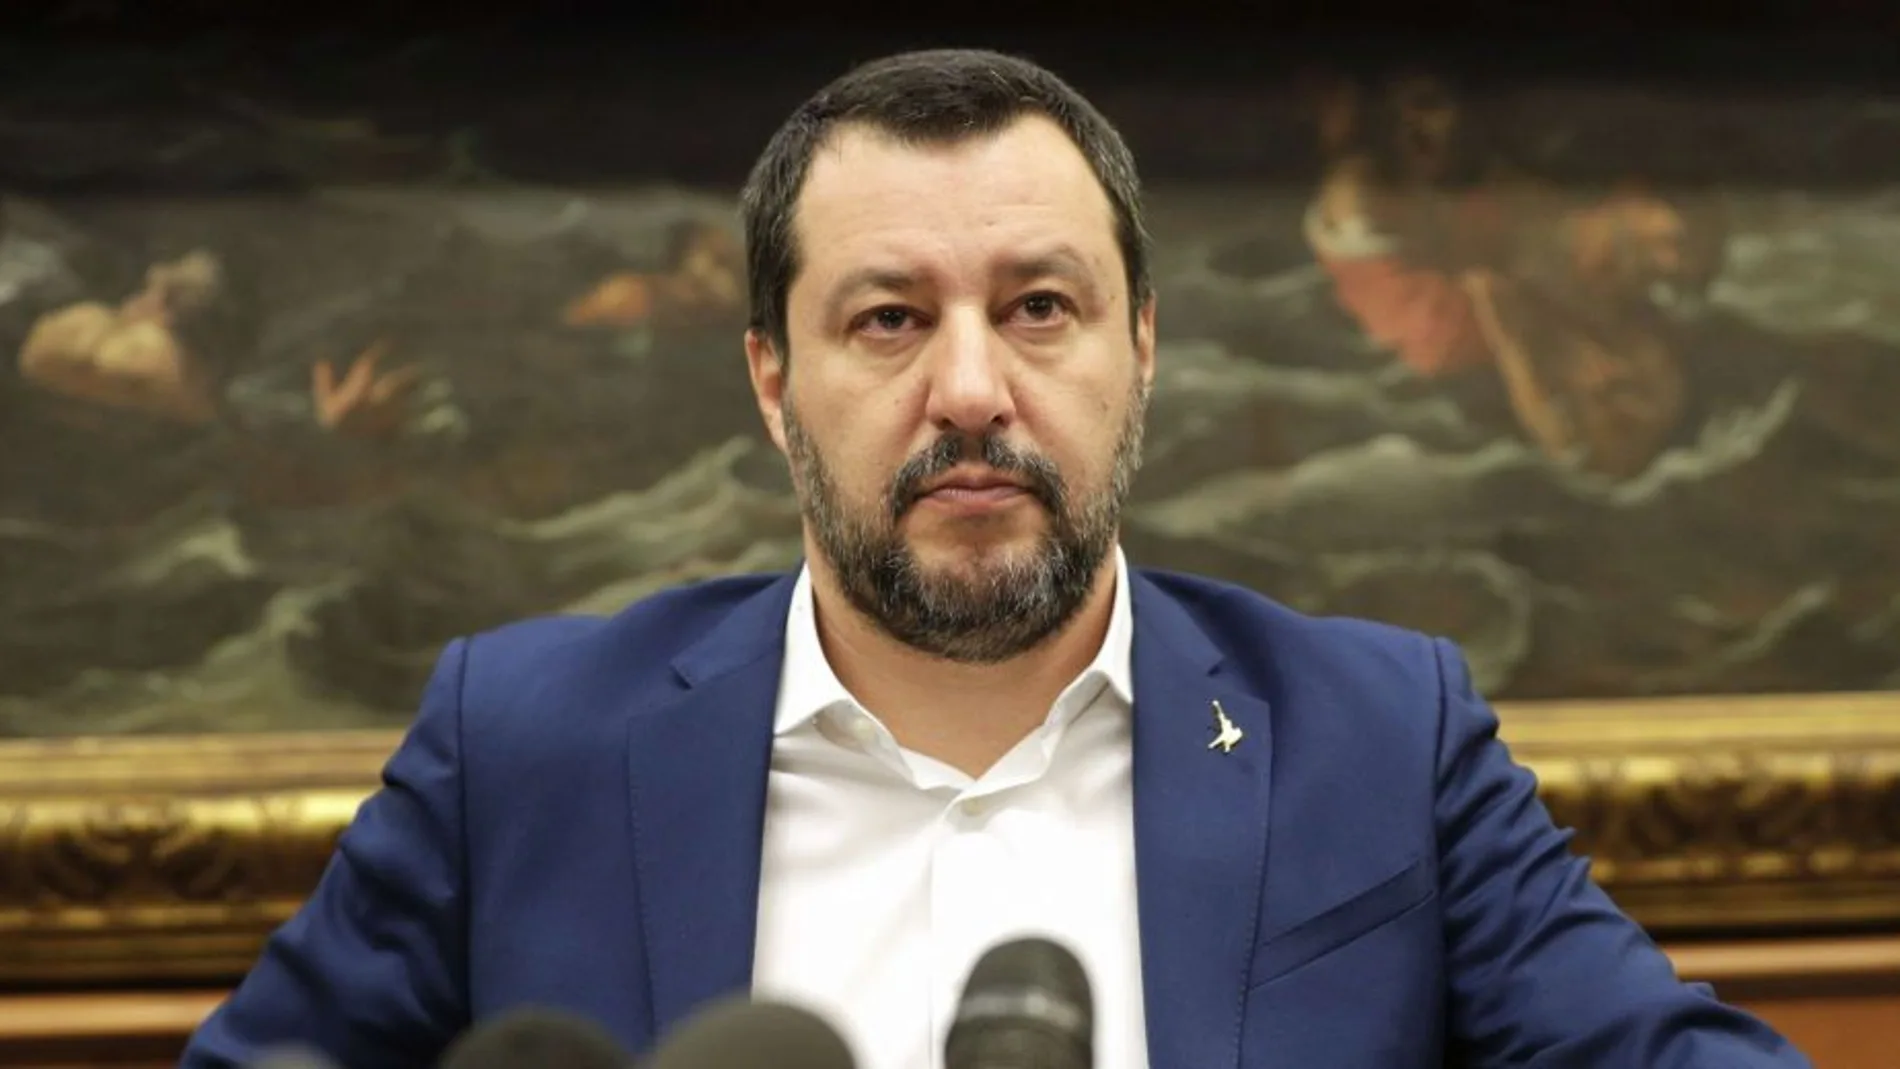 Matteo Salvini, ve más cerca la posibilidad de ser primer ministro / Ap